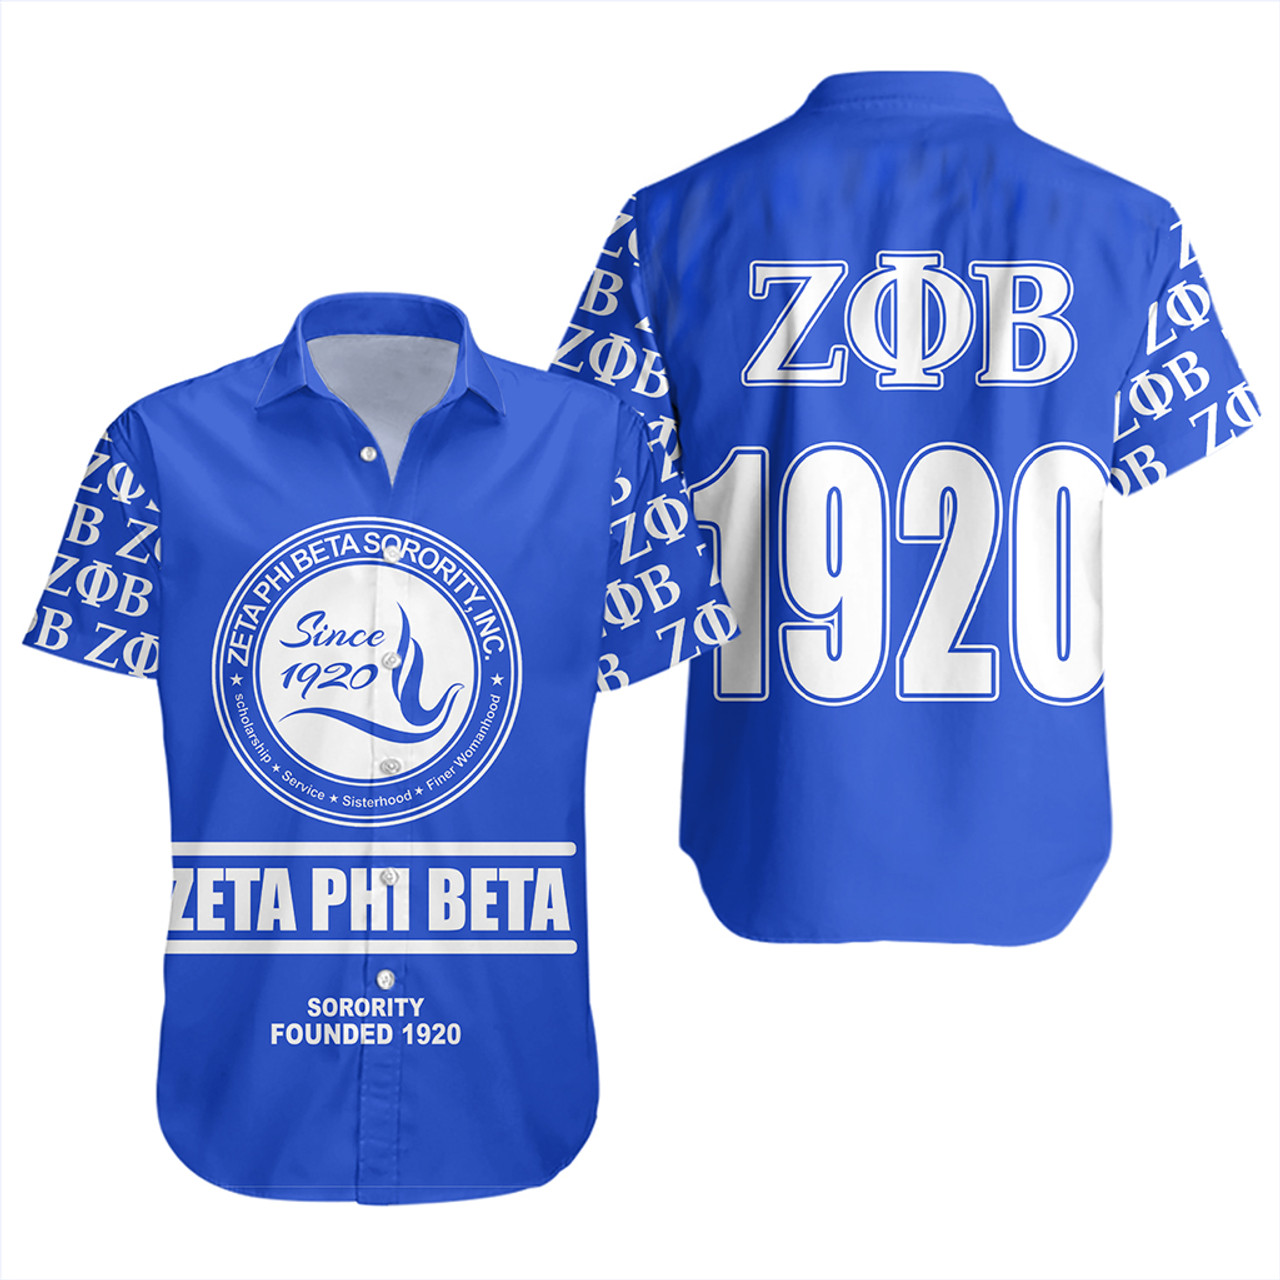 Zeta Phi Beta Short Sleeve Shirt Since 1920